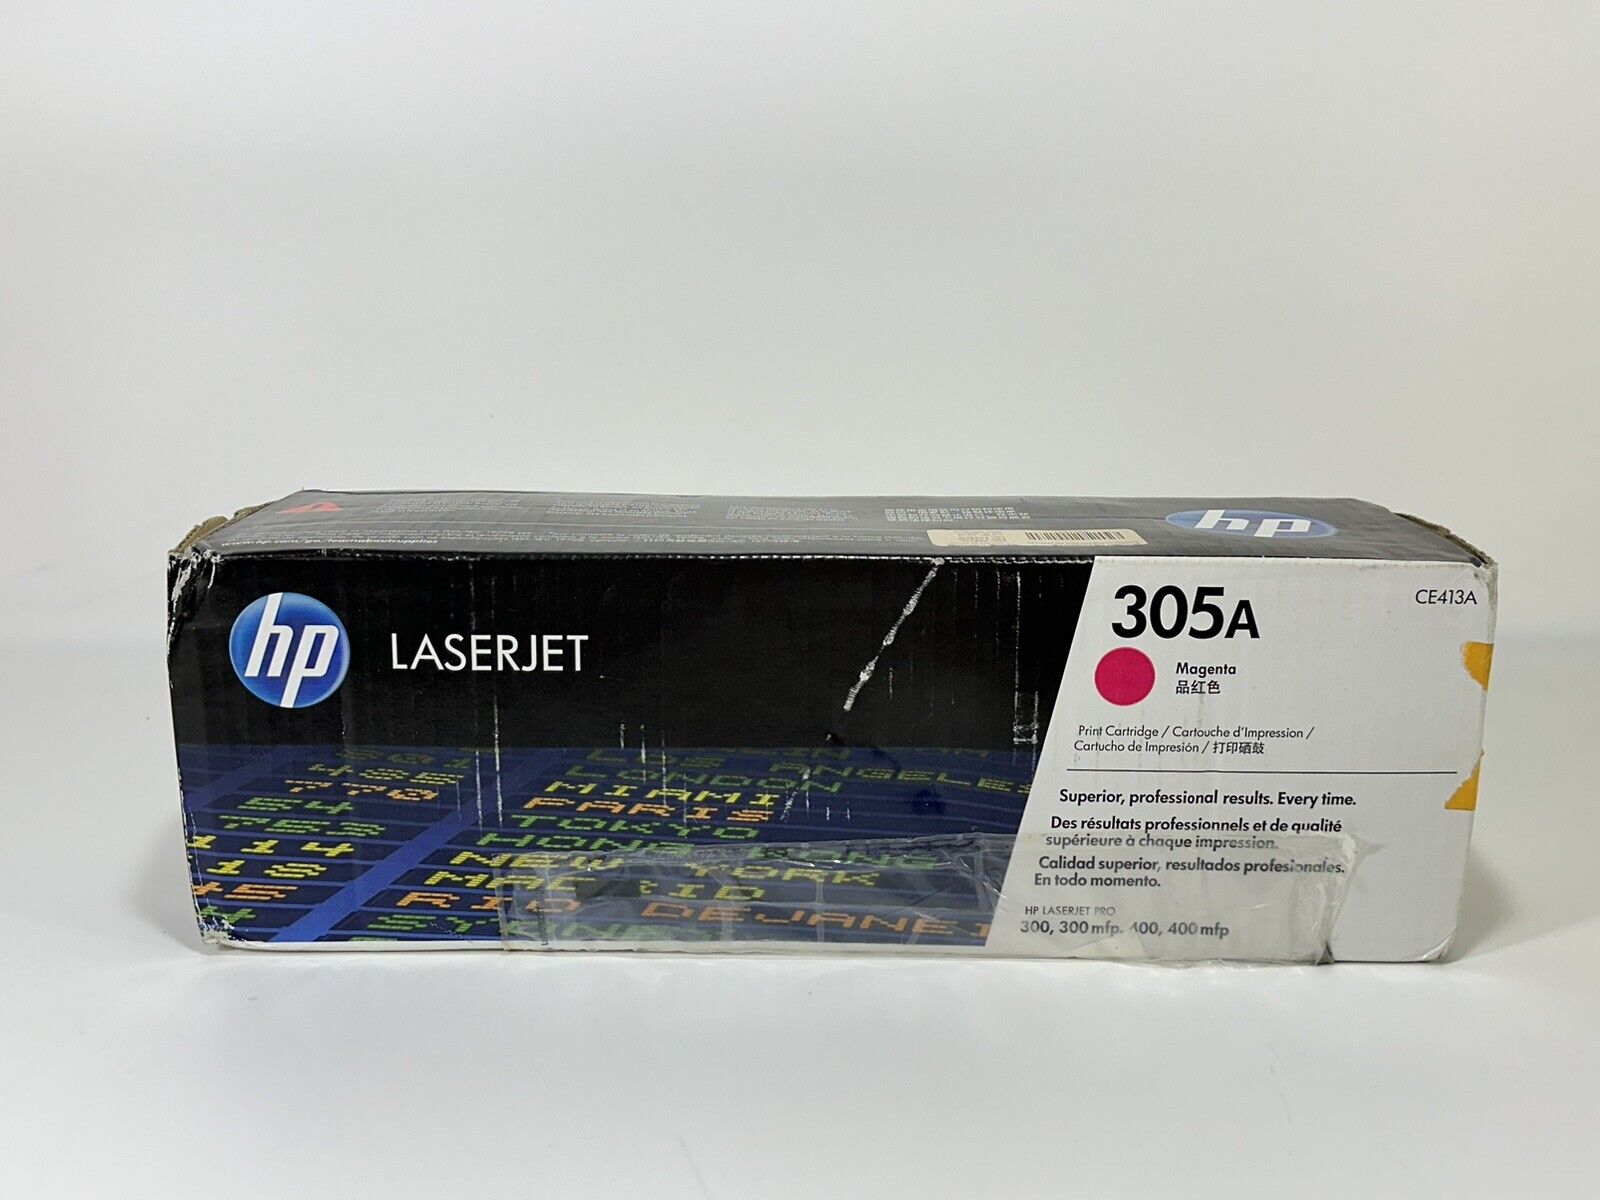 Genuine HP CE413A Magenta Toner Cartridge 305A for LaserJet 300 400 ~ SEALED BOX